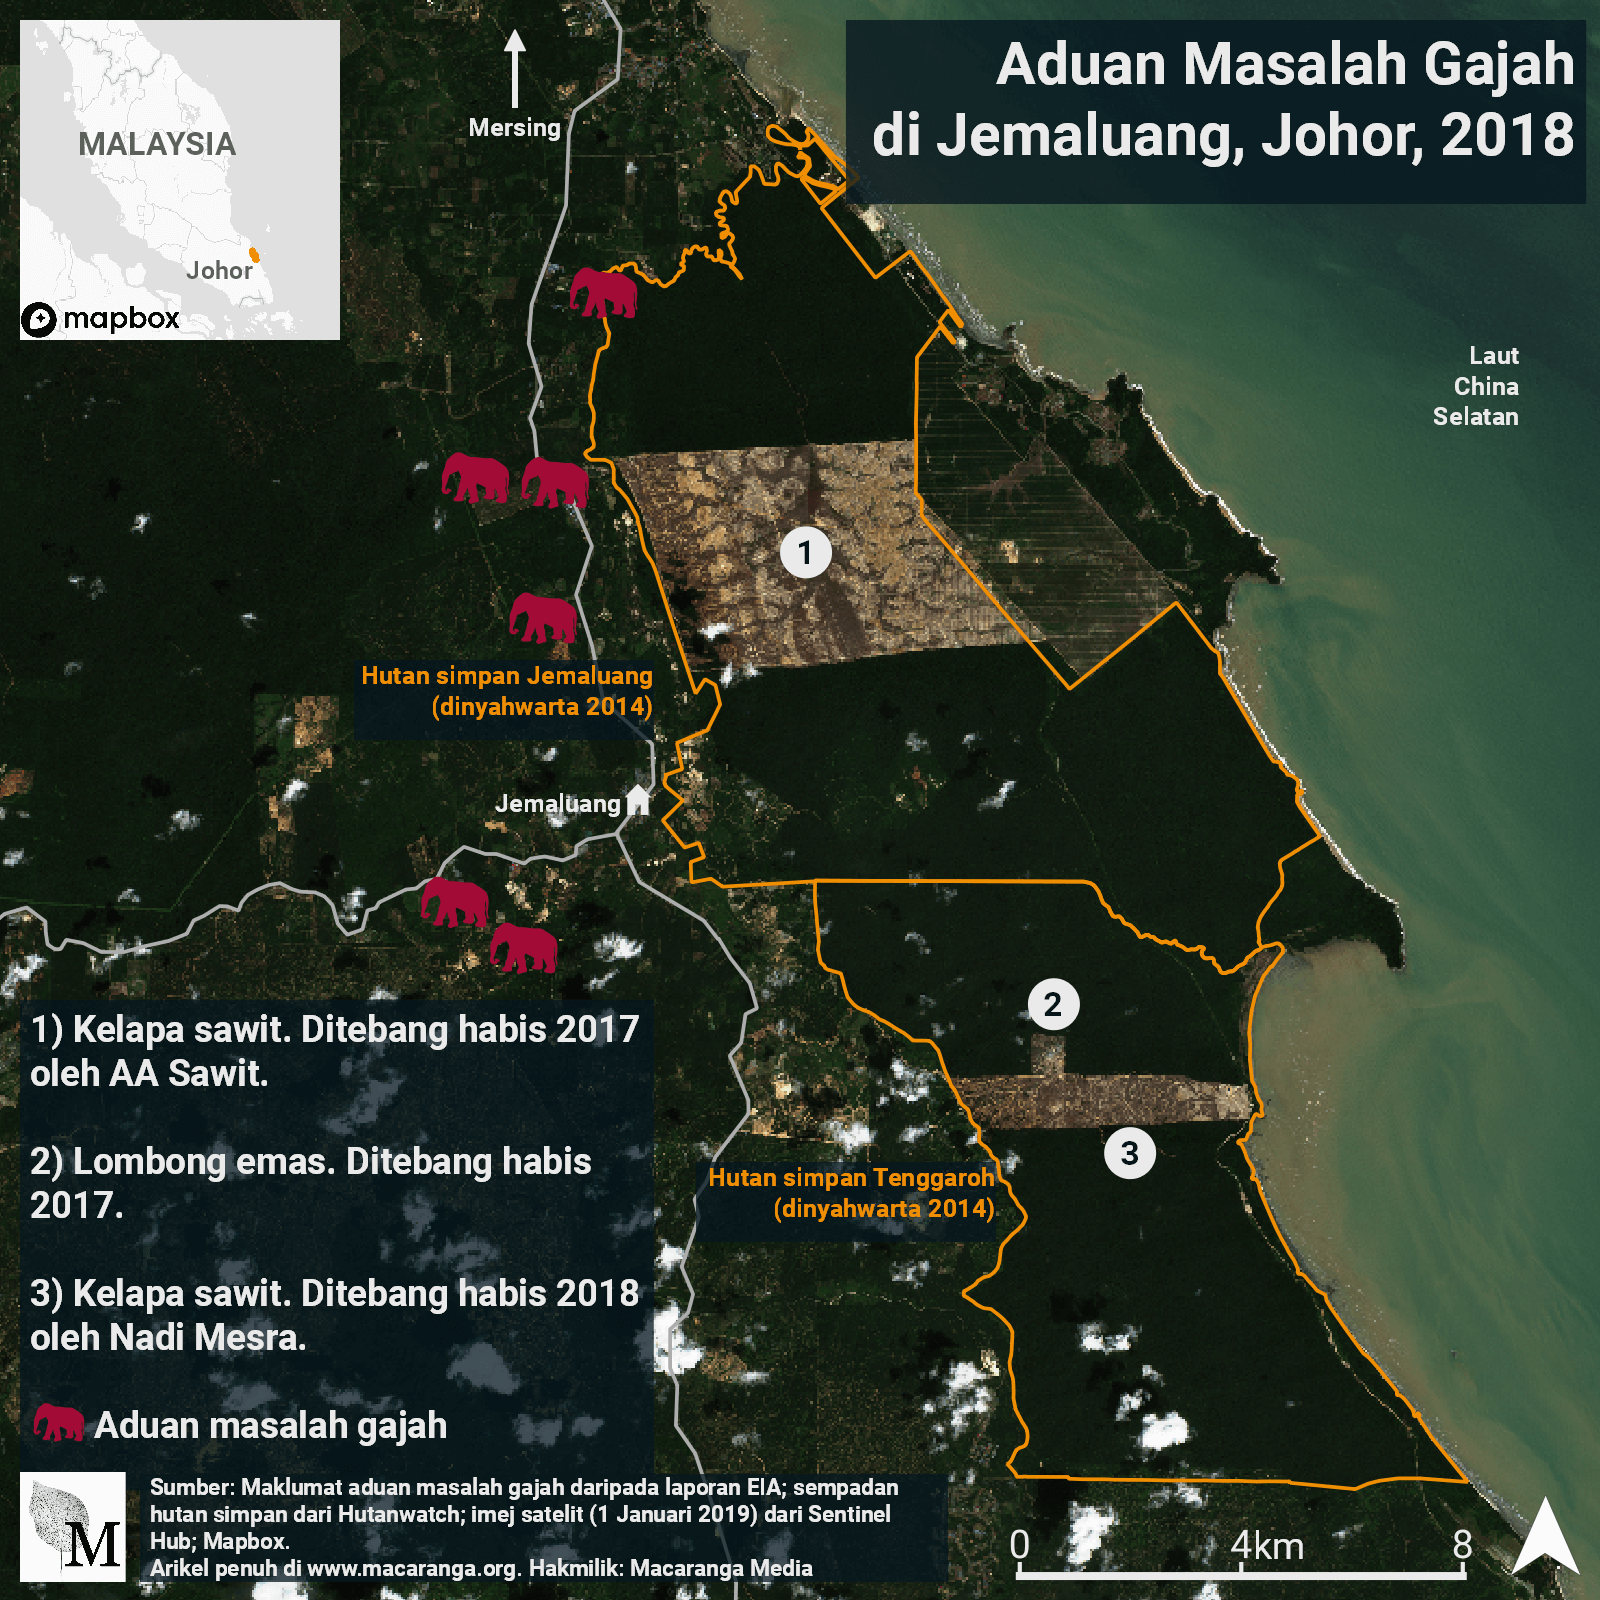 Peta lokasi aduan masalah gajah di sekitar Jemaluang, Johor. Tempat ini merupakan kawasan panas konflik manusia-gajah.